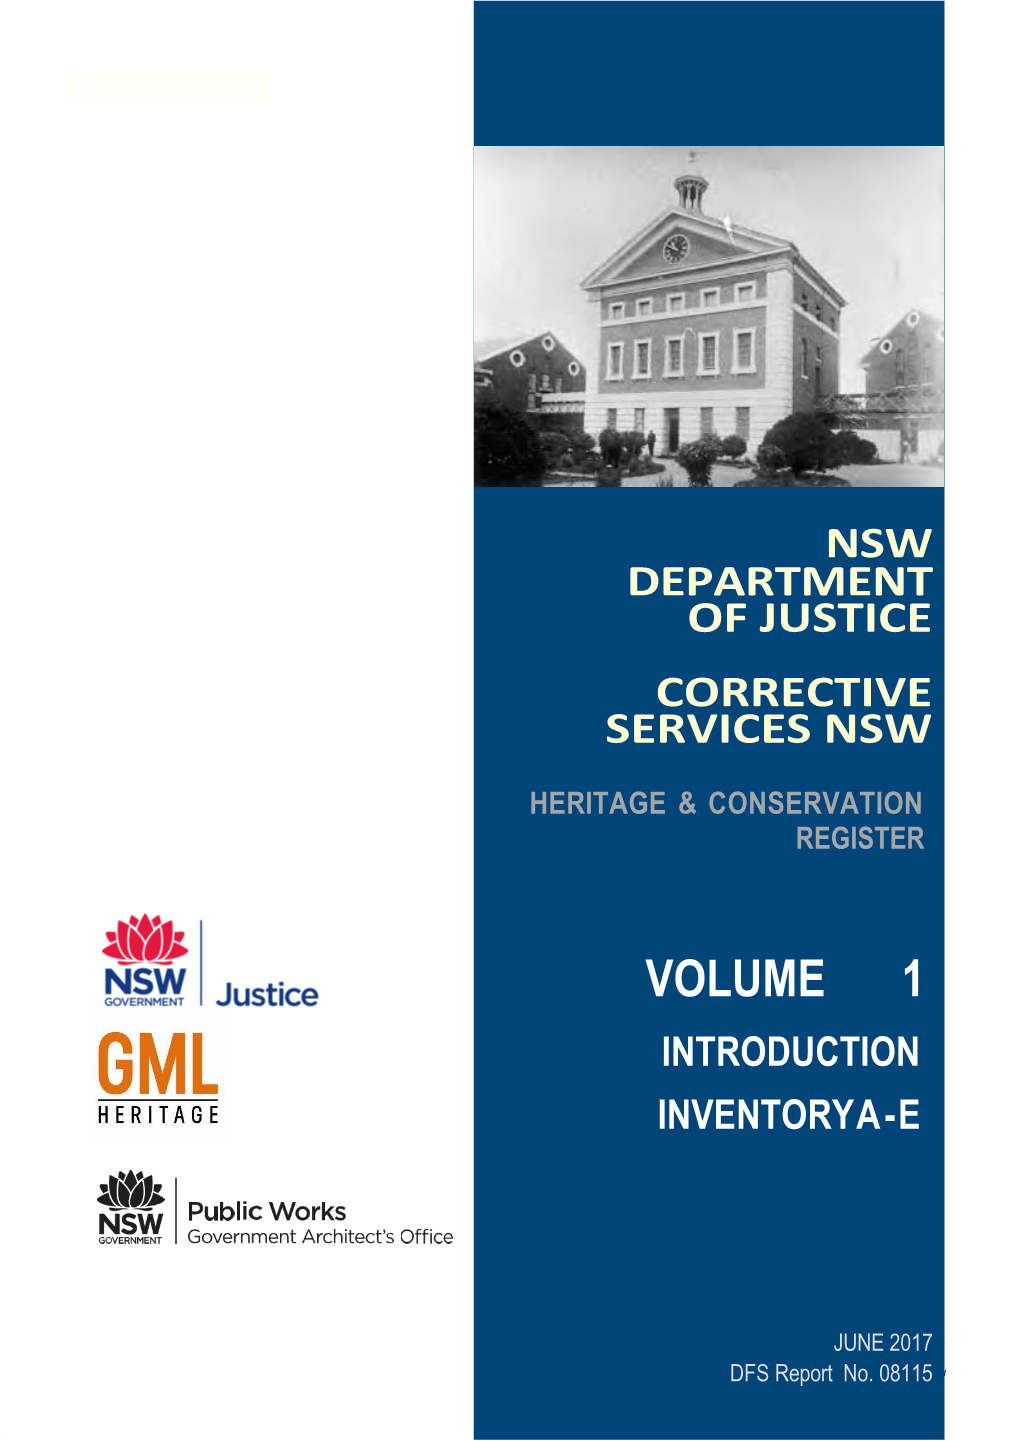 Volume 1 Introduction Inventorya-E